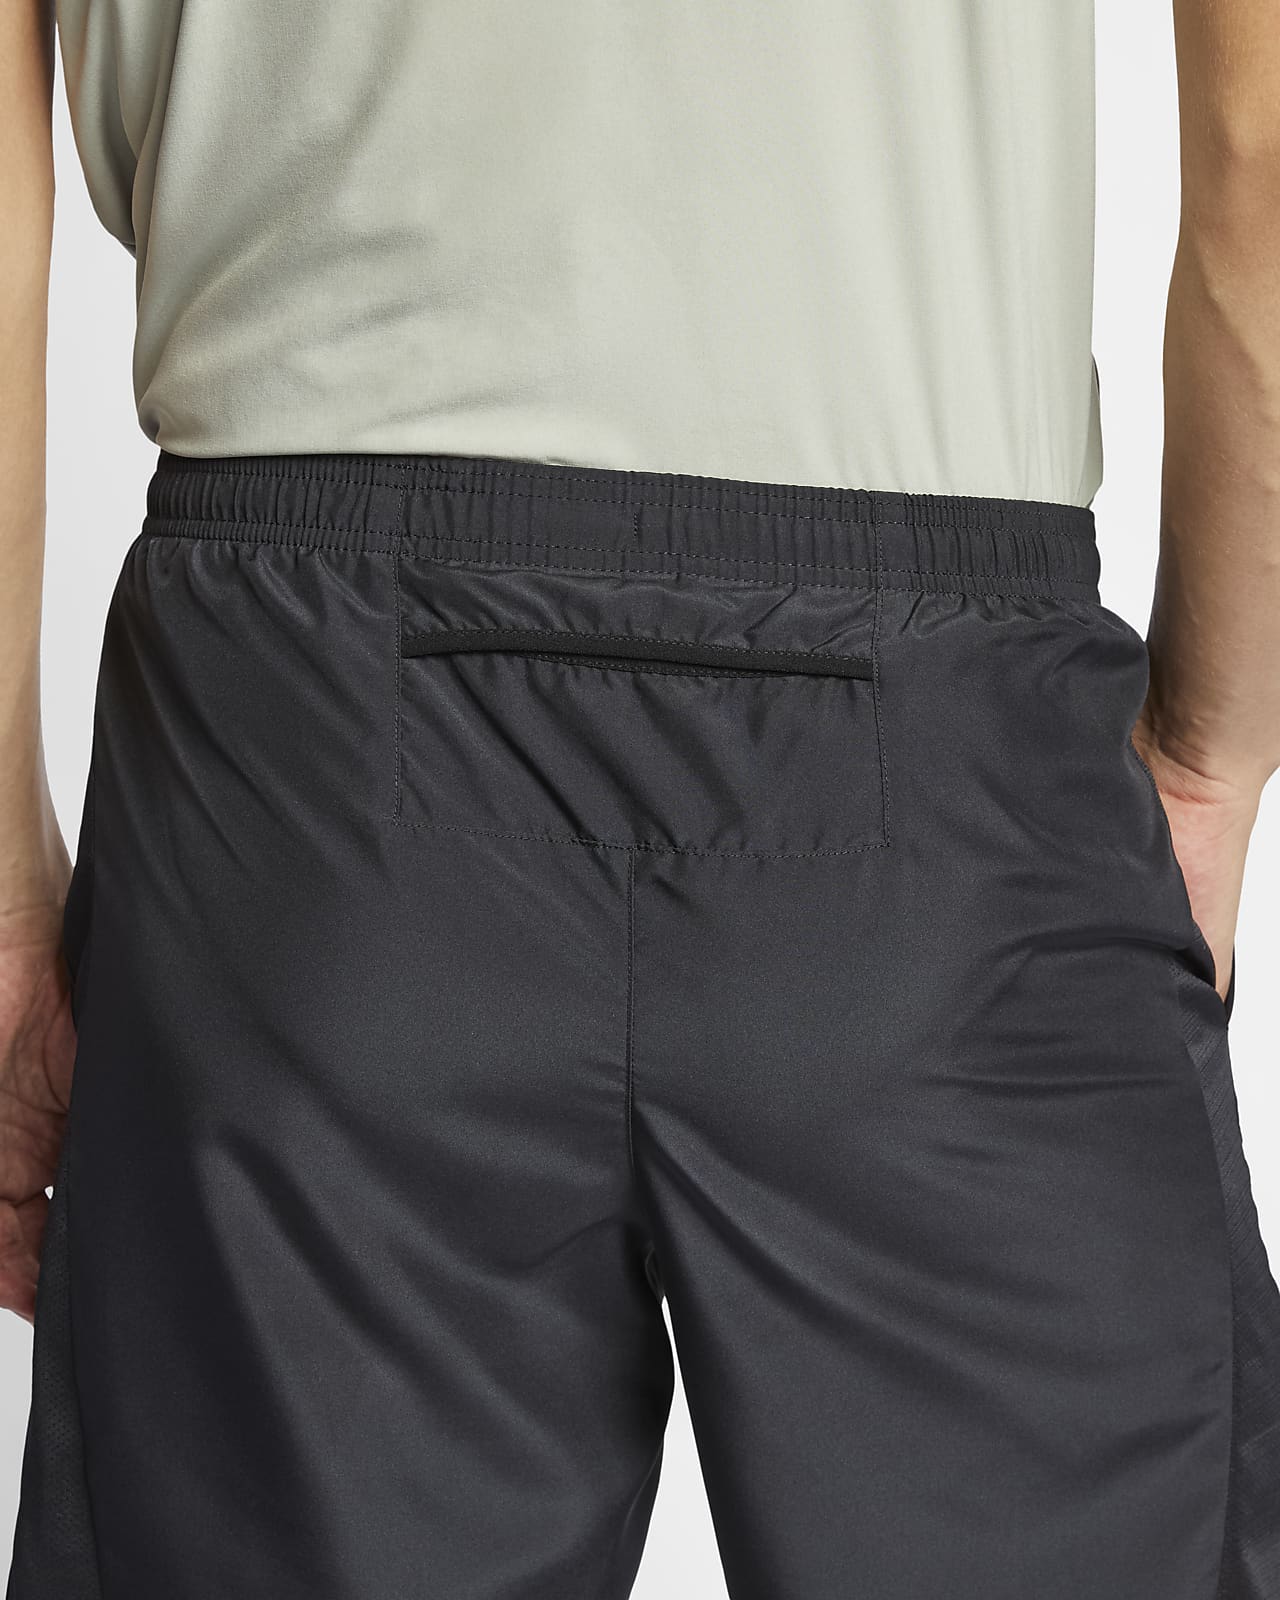 grey nike challenger shorts